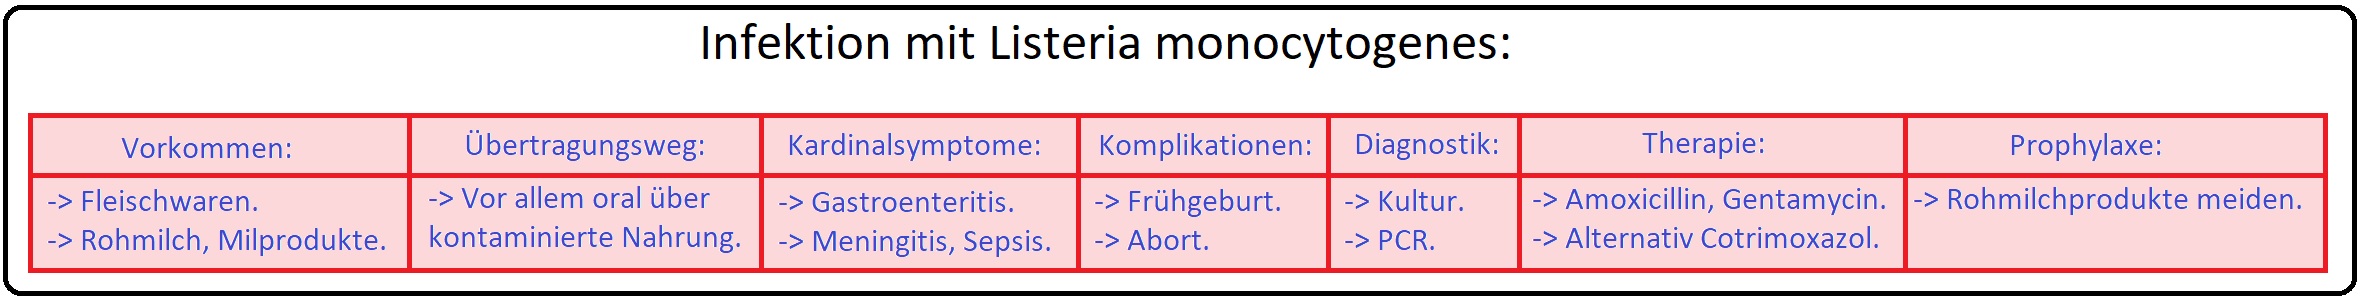 1167 Infektion mit Listeria monocytogenes